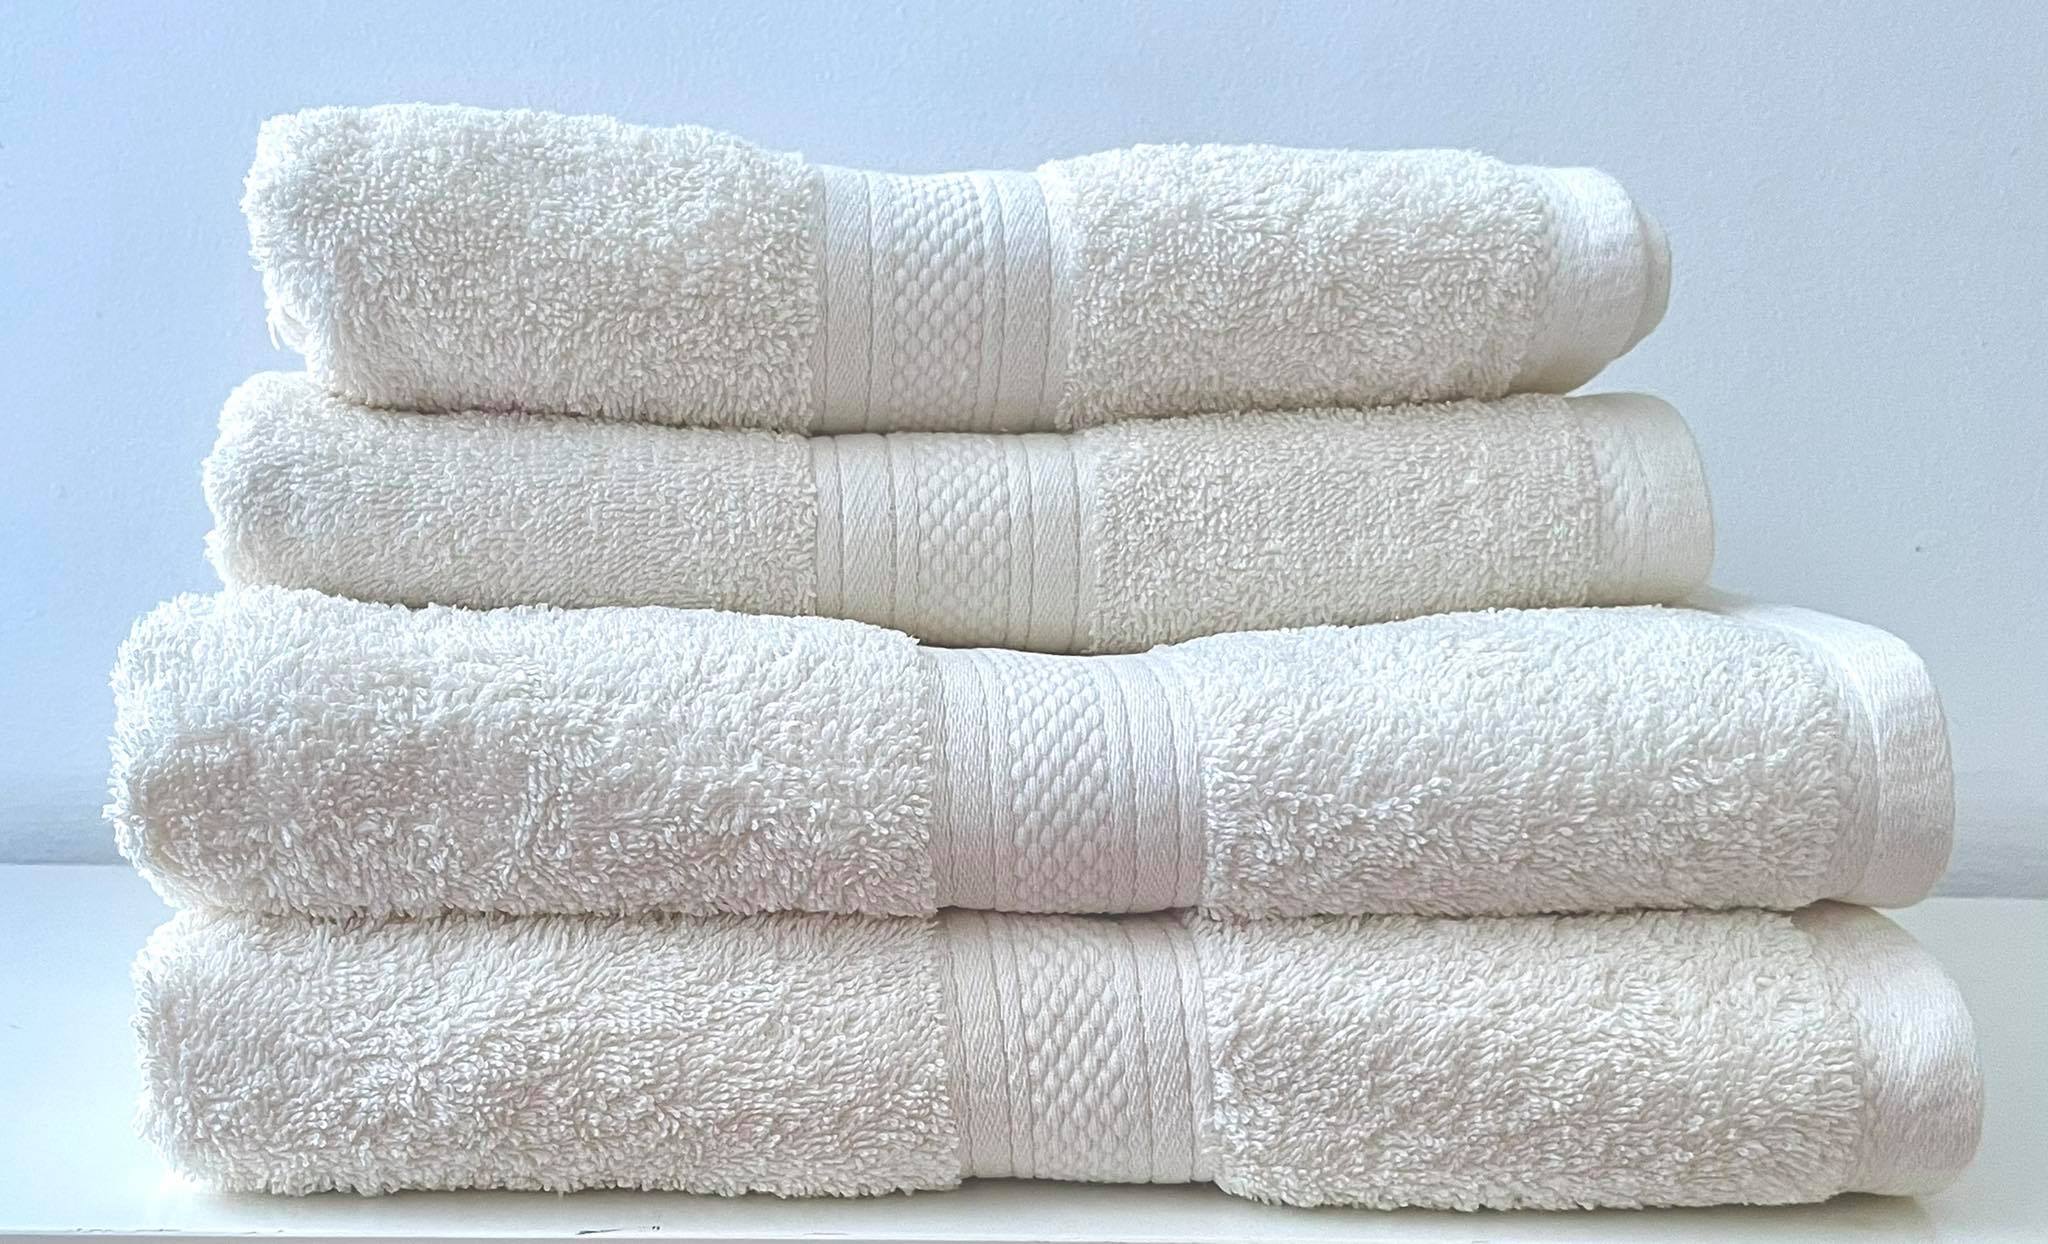 CL Home 100% Cotton Towels, 550g, Cream